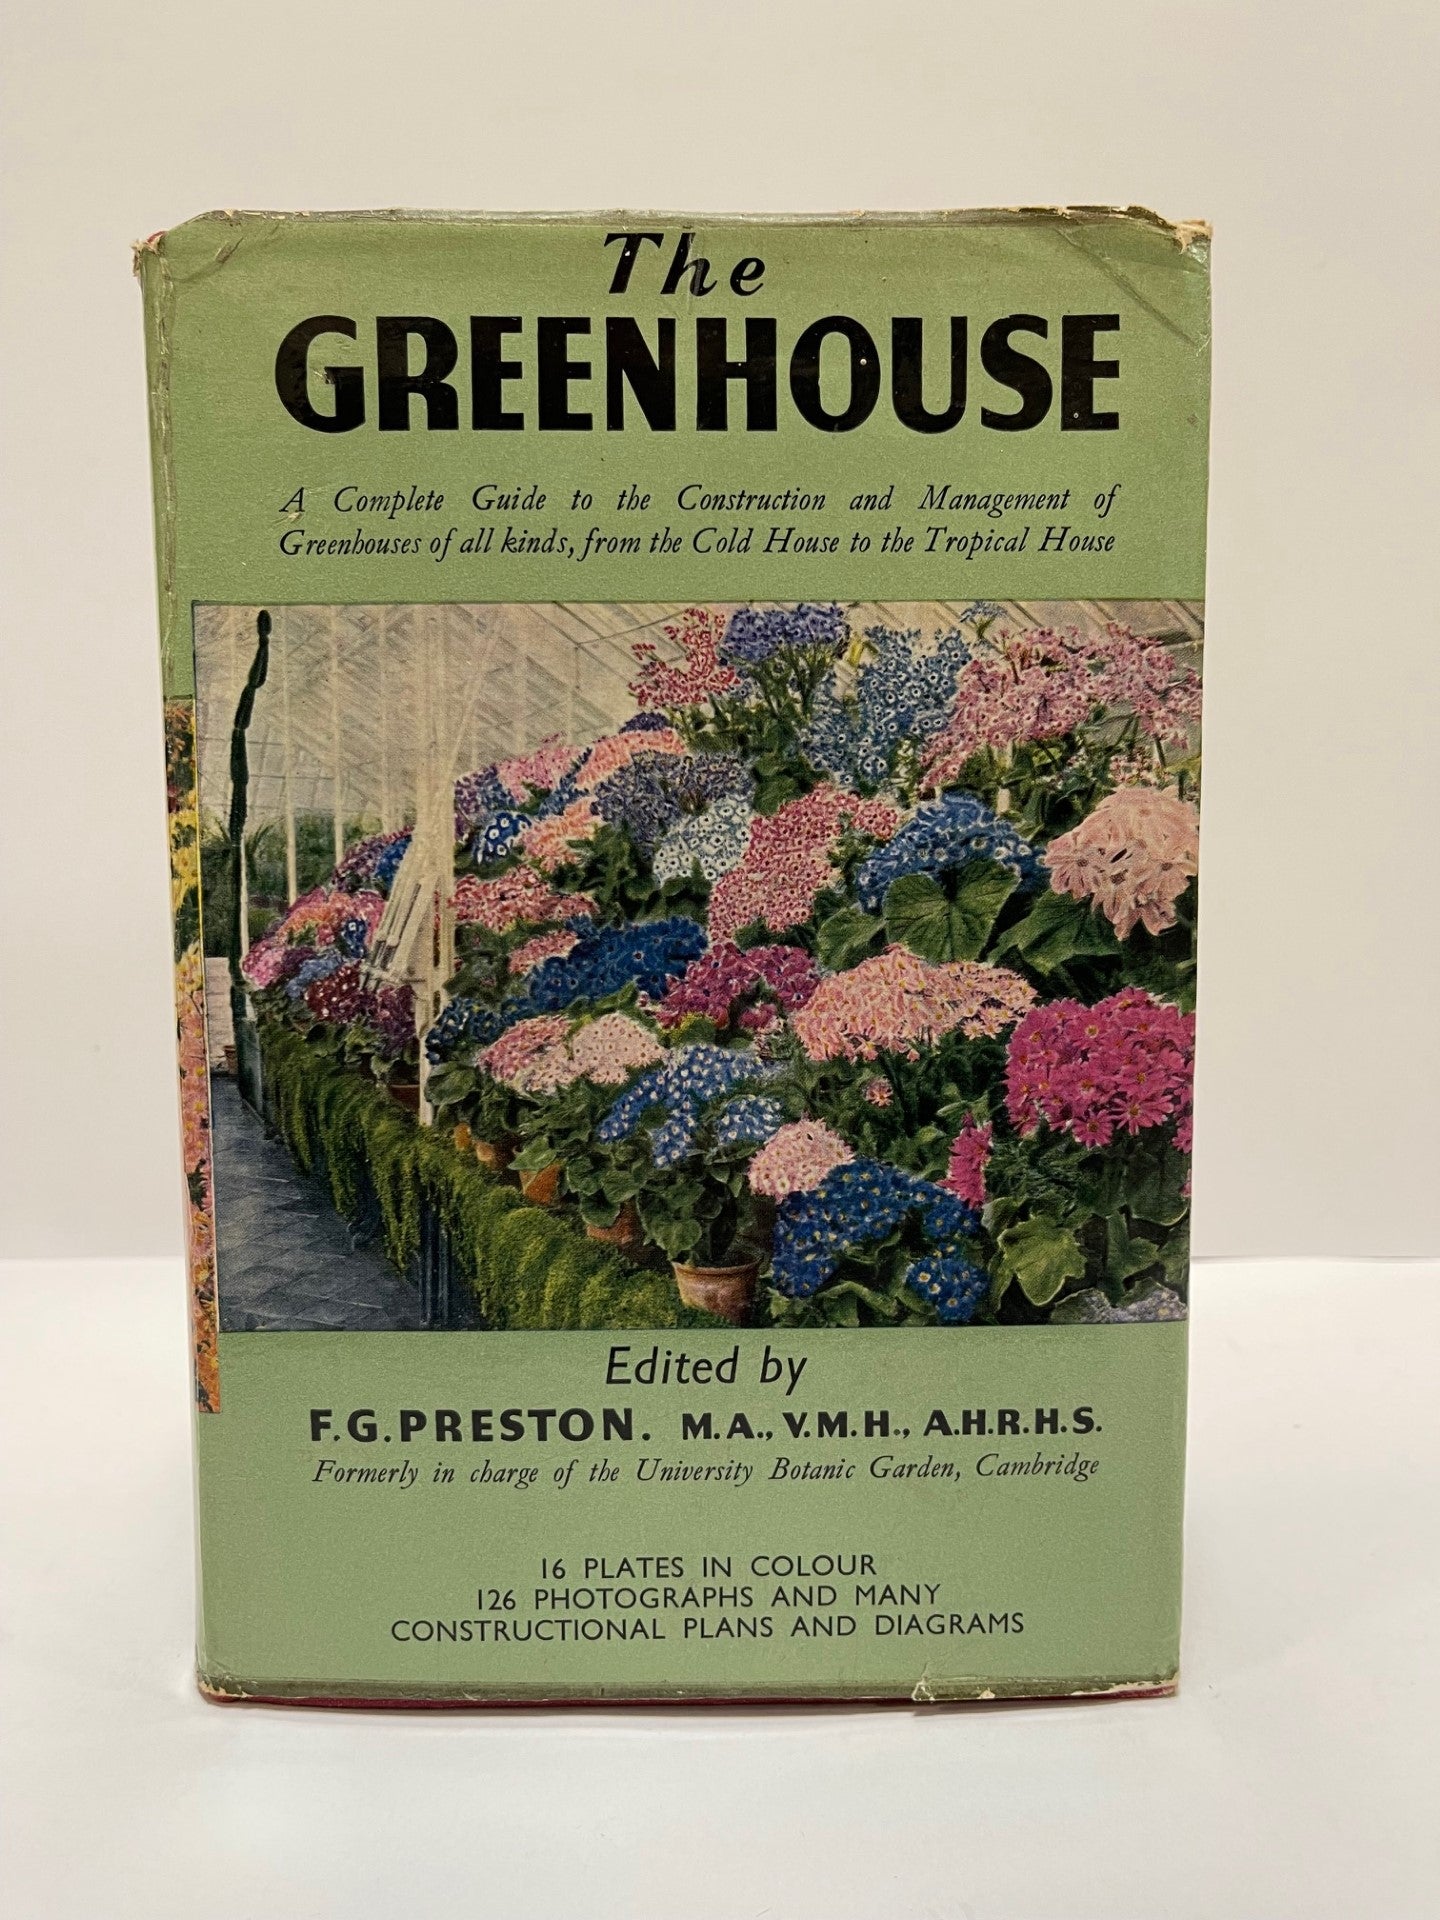 The Greenhouse by FG Preston